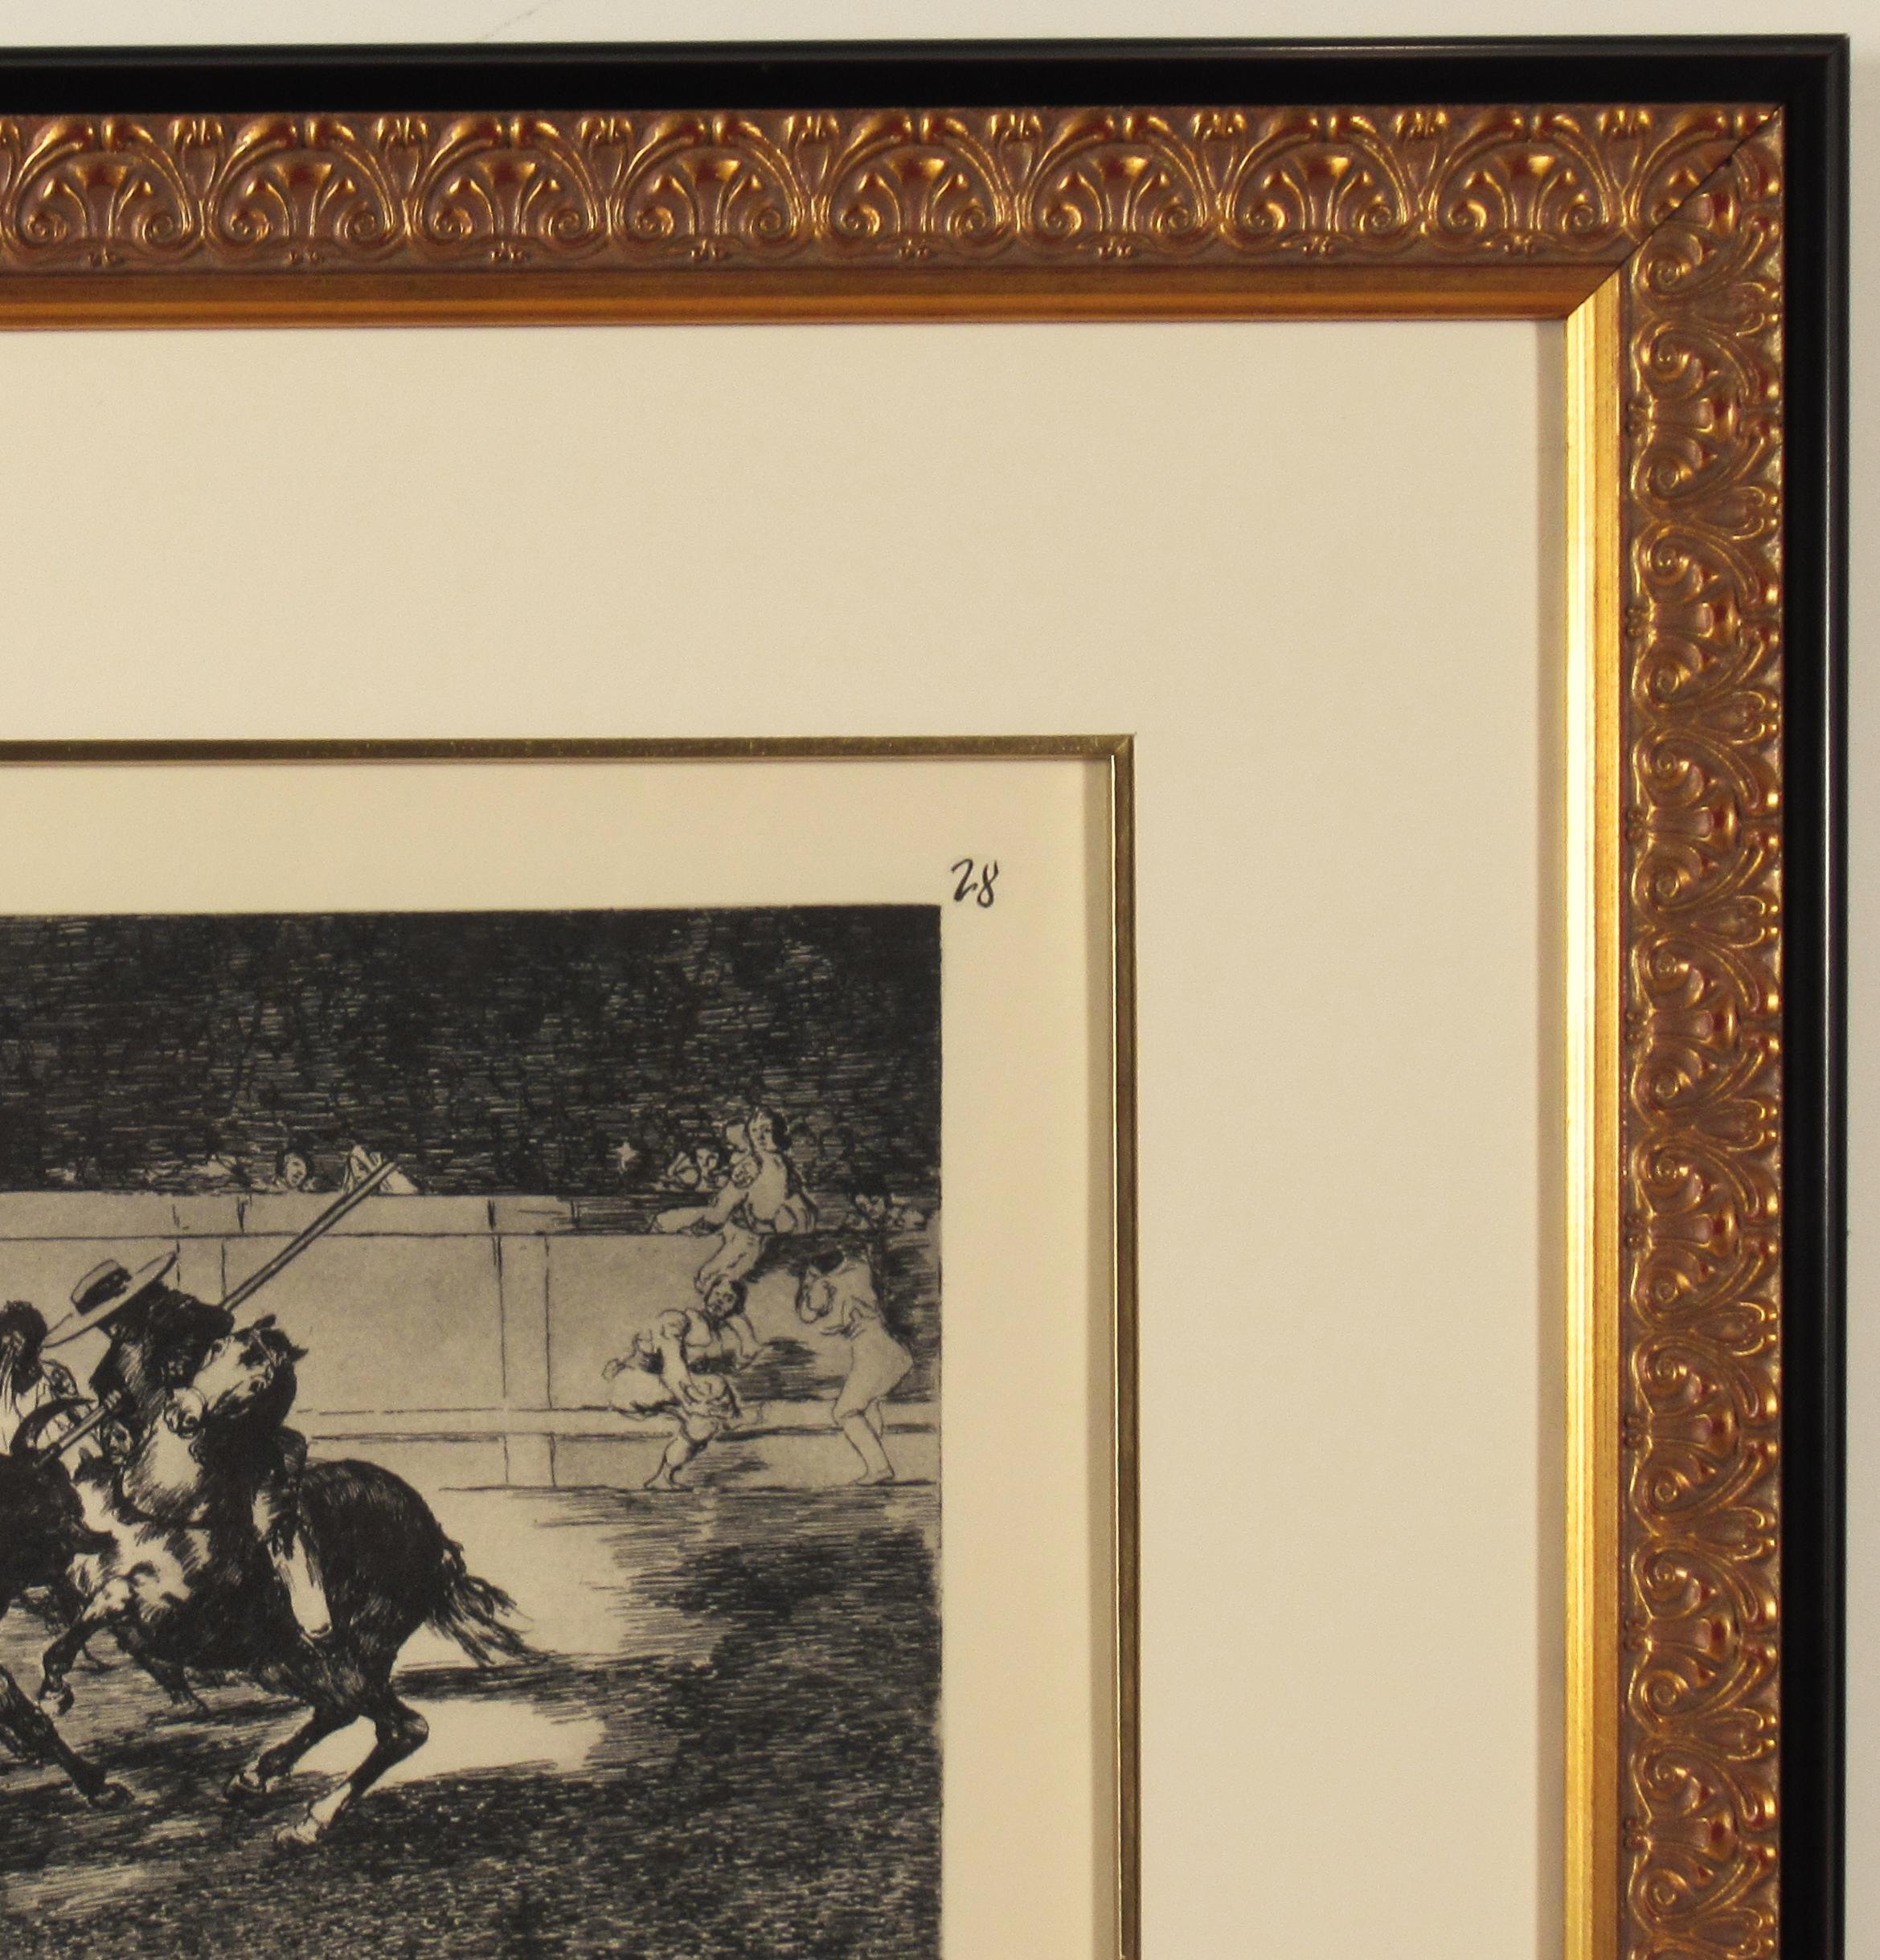 La Tauromaquia, Plate #28 - Beige Figurative Print by Francisco Goya